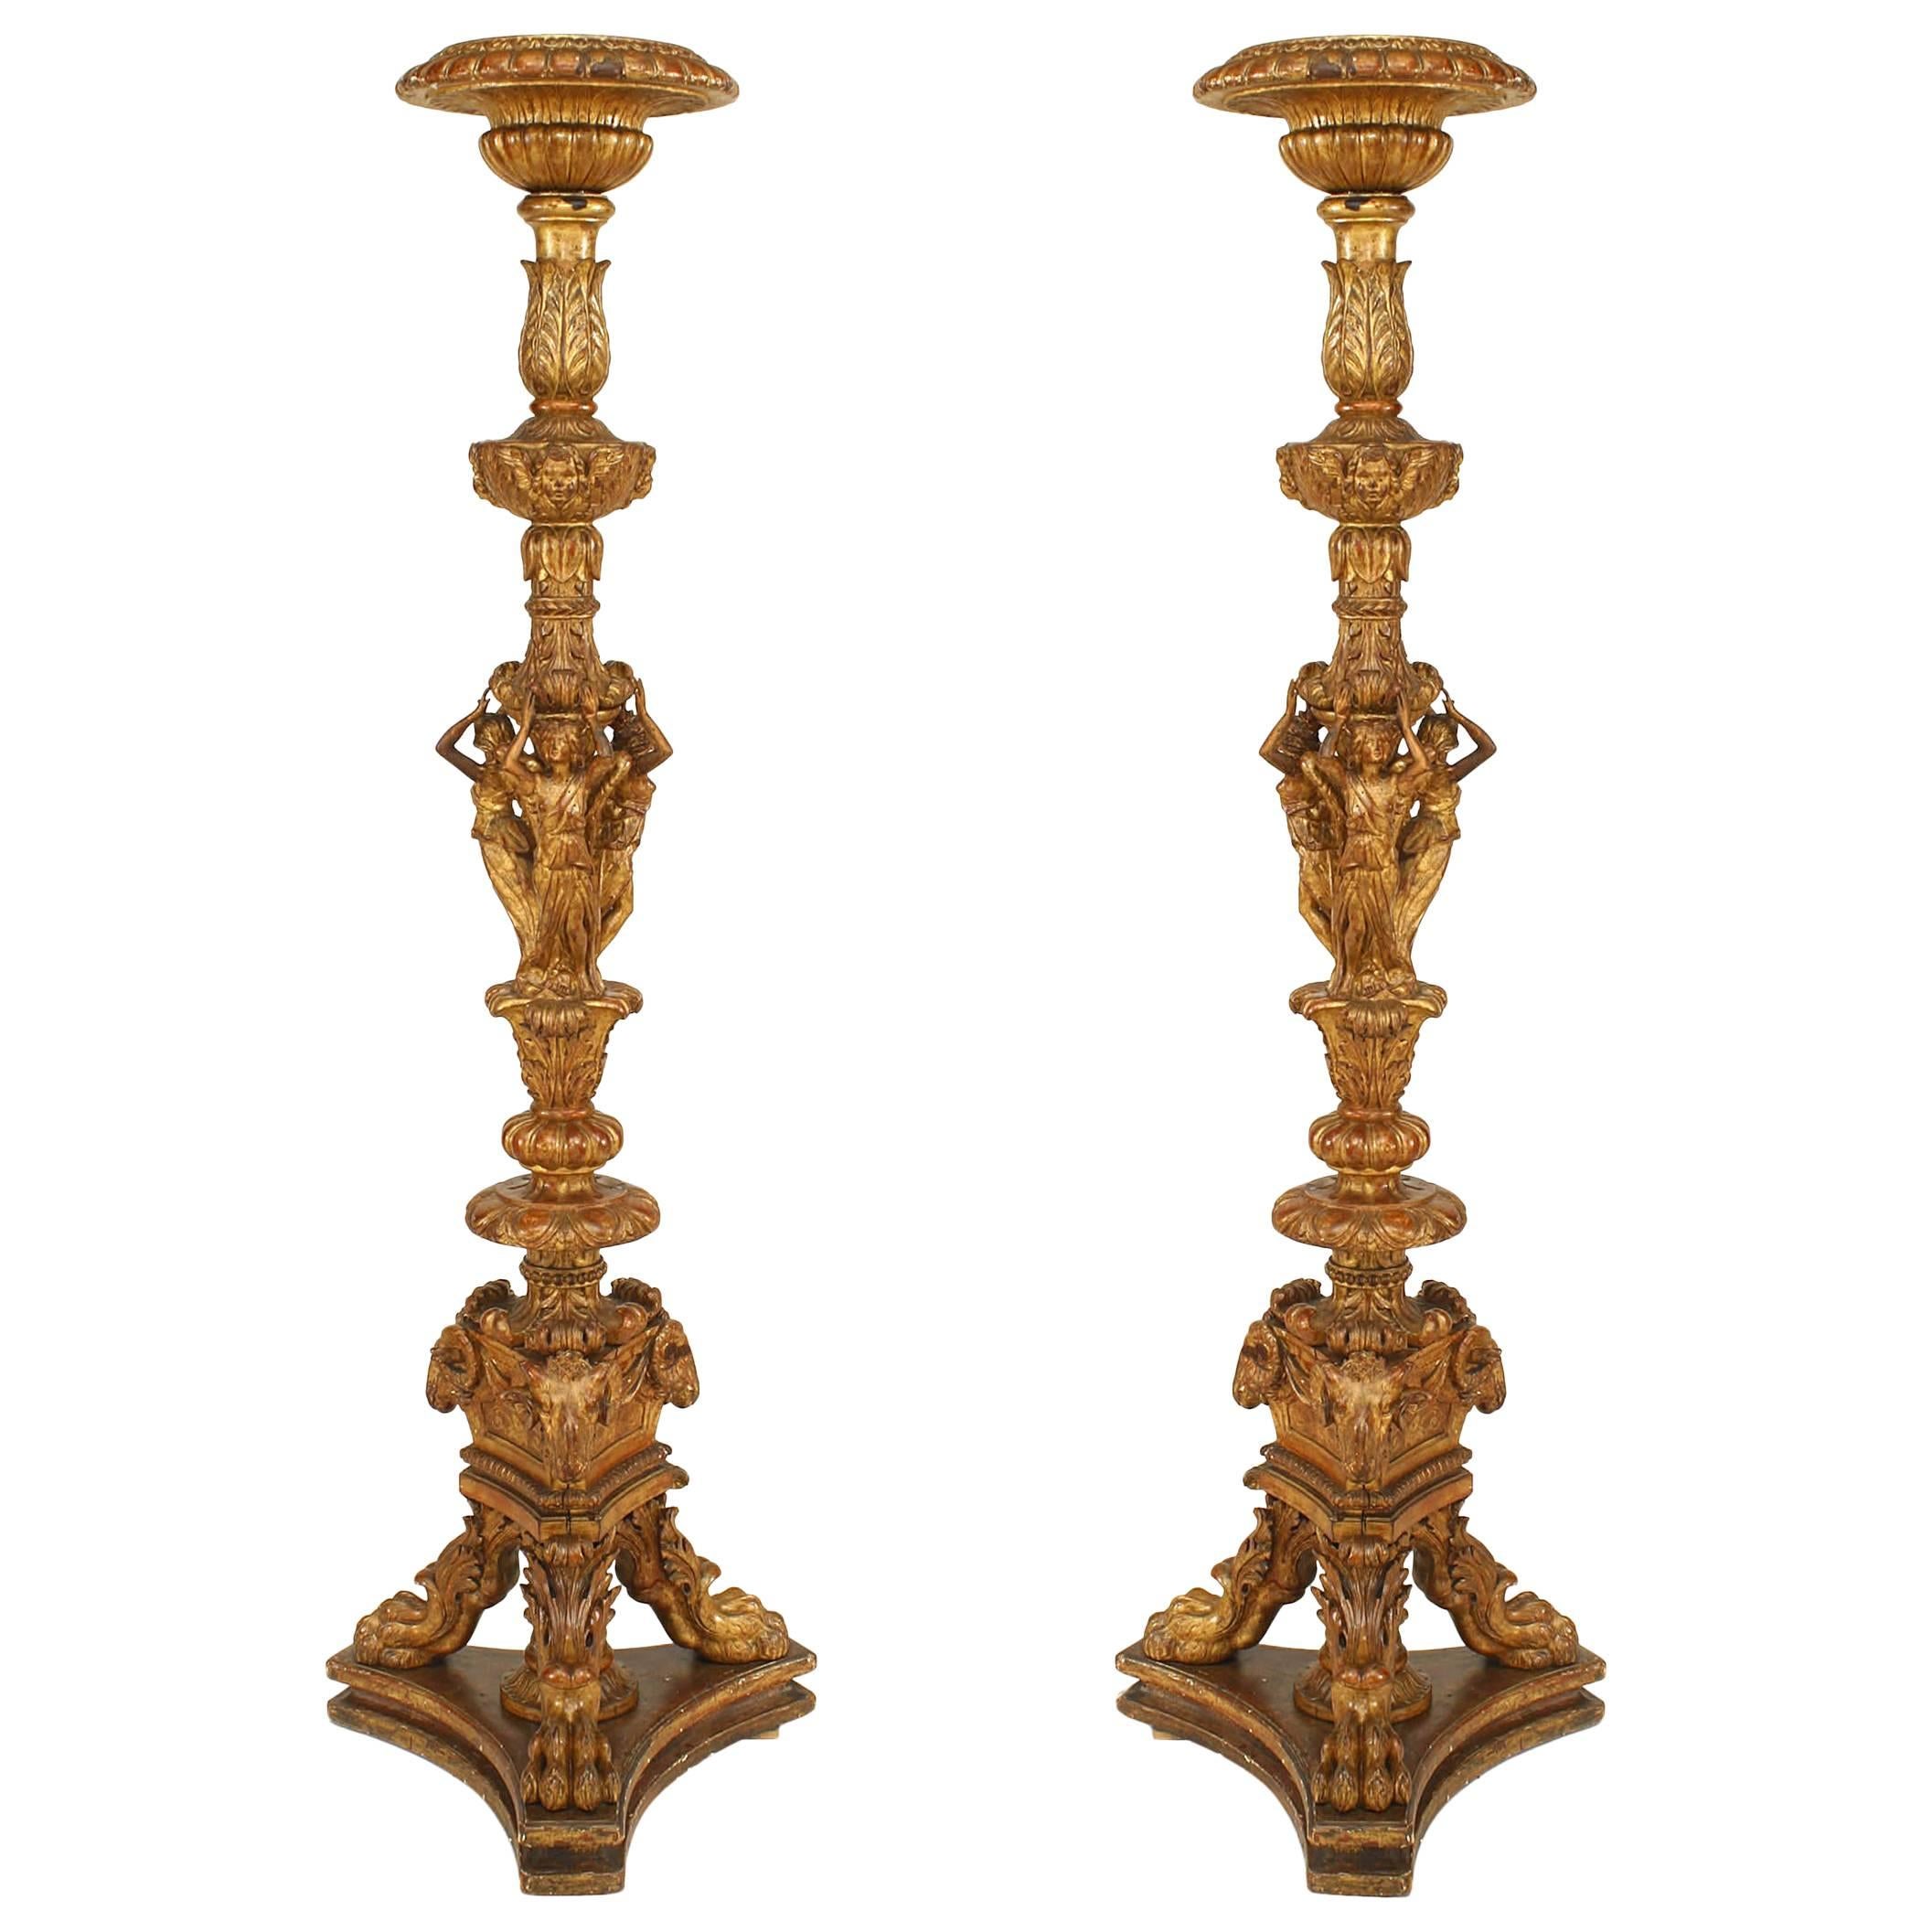 Pair of French Louis XVI Style, 19th Century Gilt Pedestals